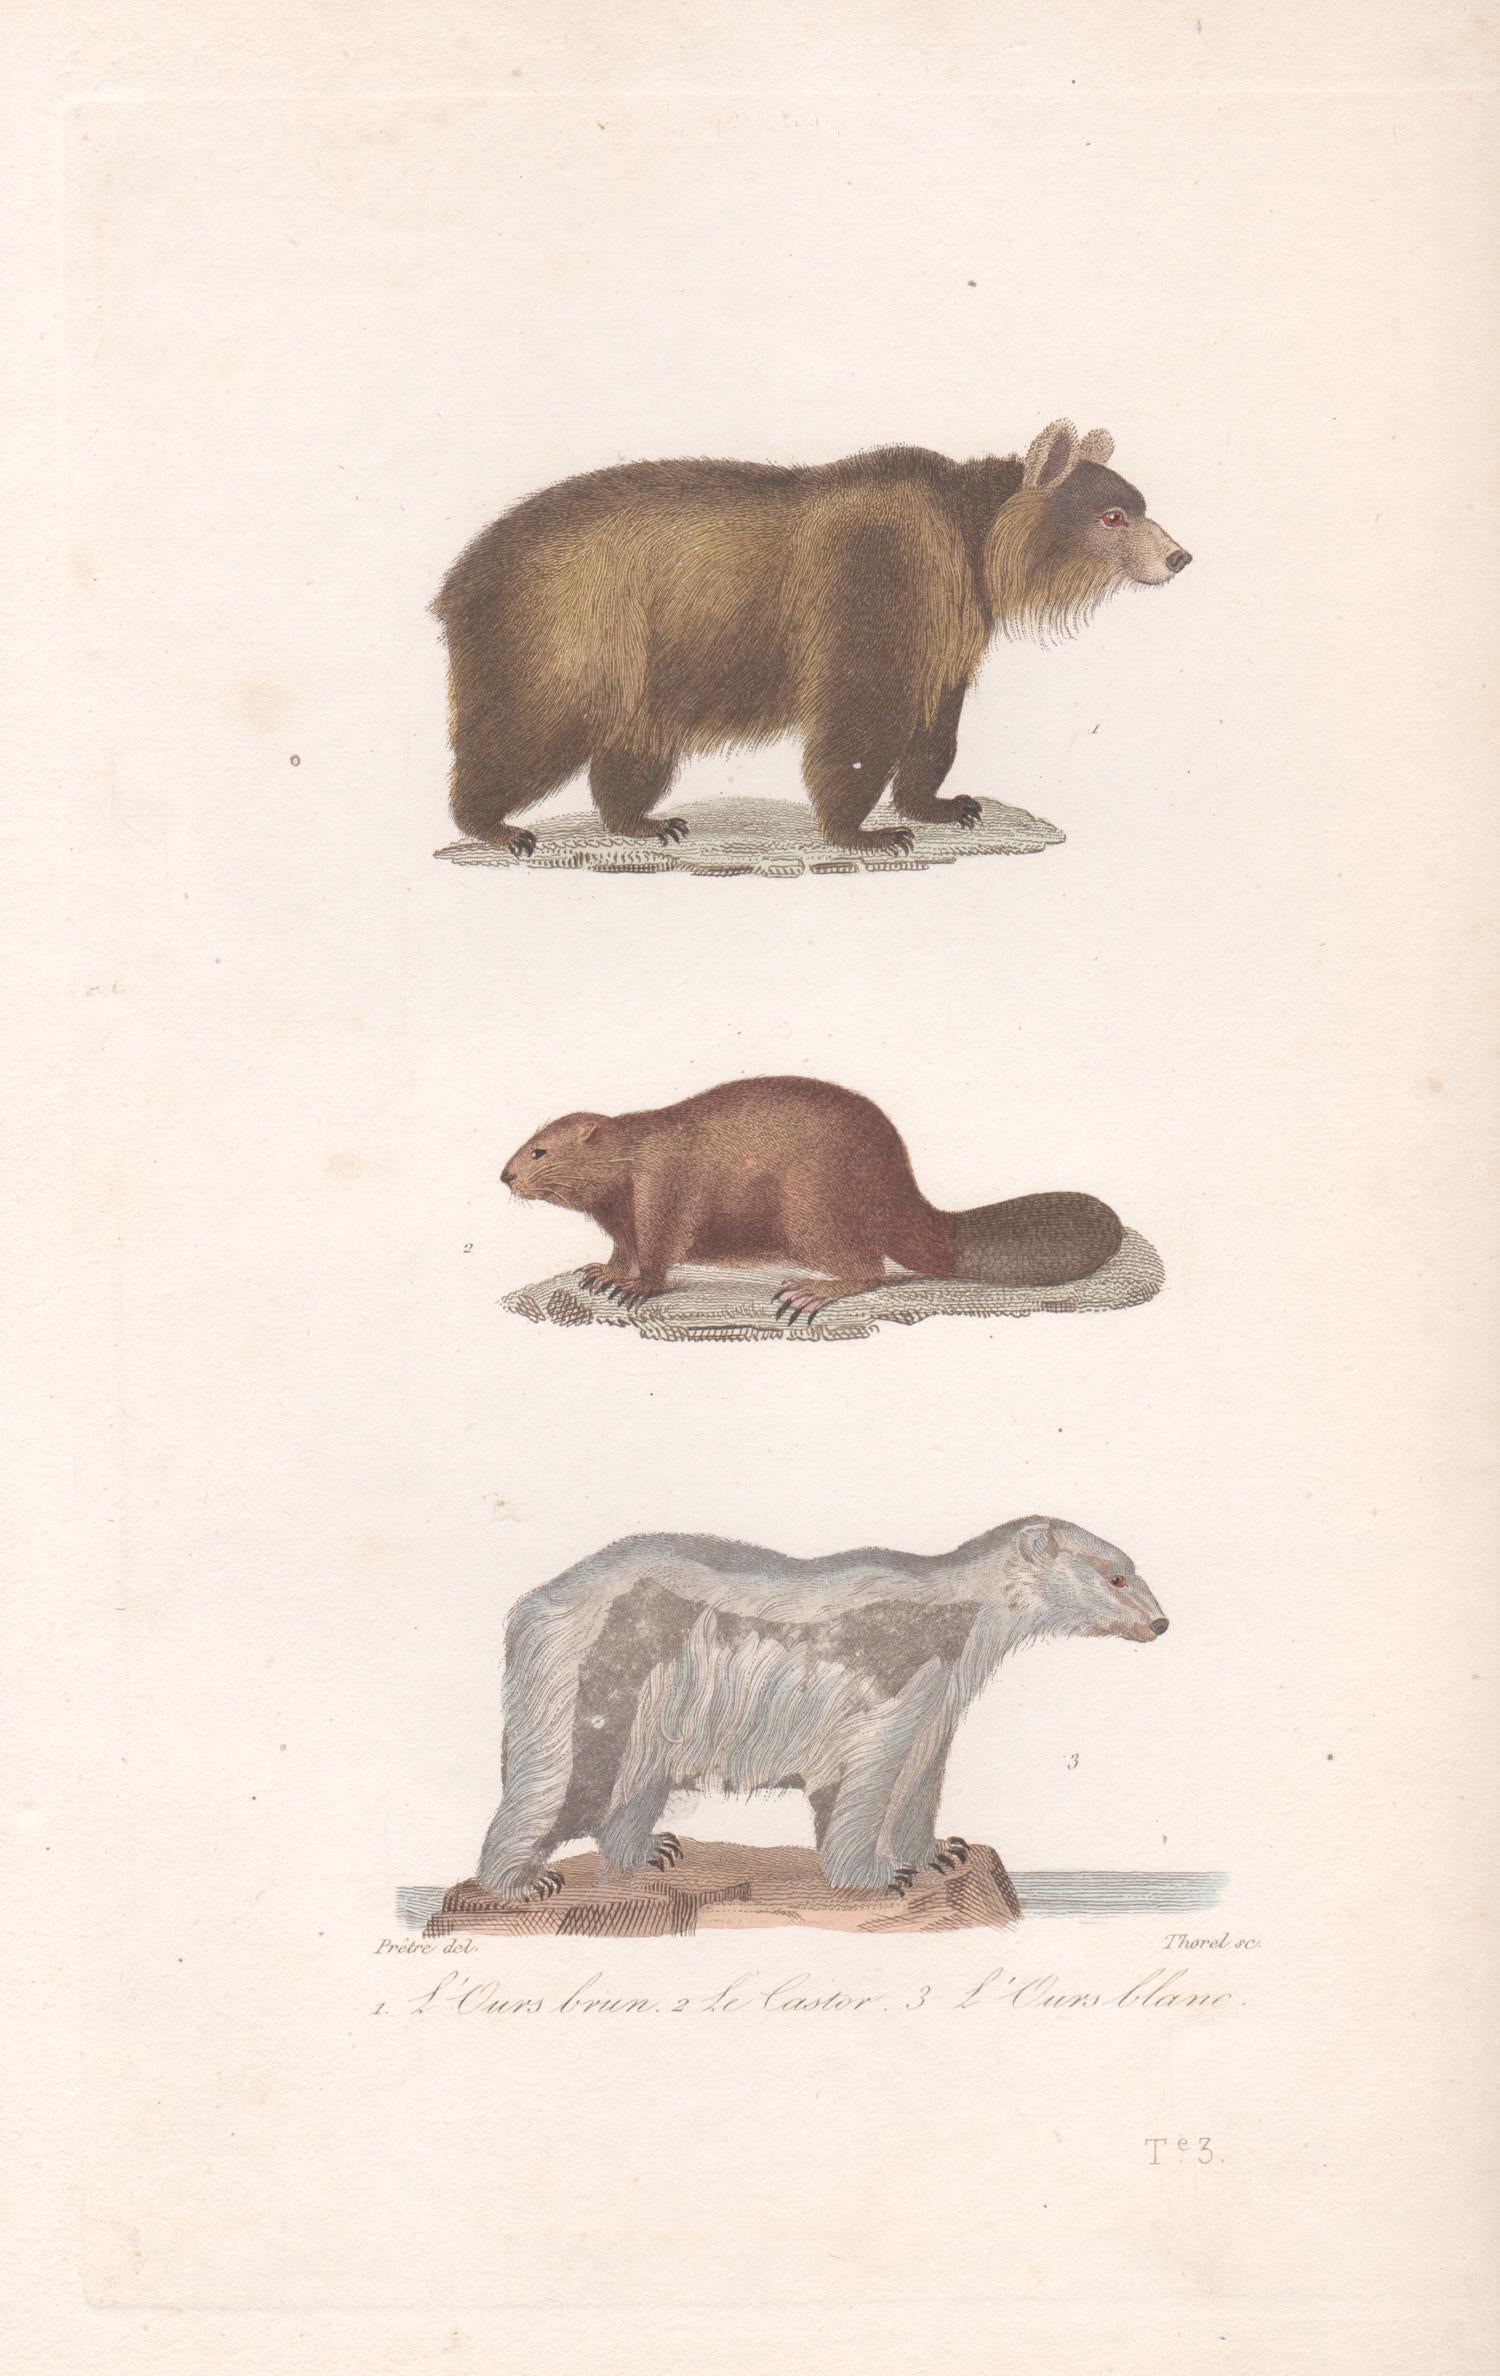 Unknown Animal Print - Brown Bears, Beaver, Polar Bear, mid 19th French century animal engraving